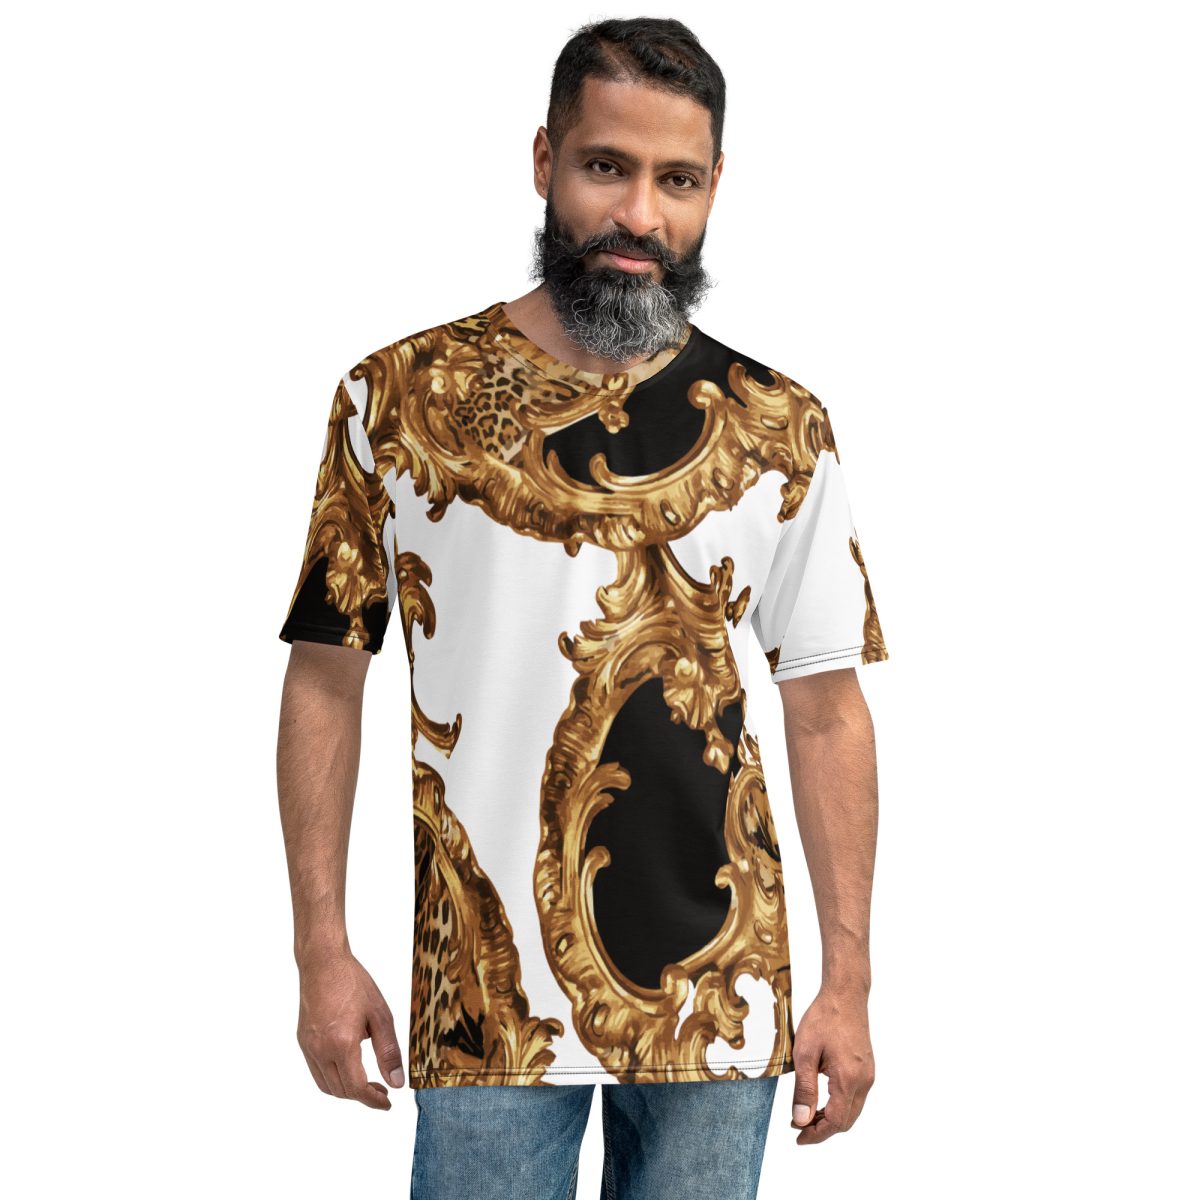 Shirt | paramore merch nike graphic tees cdg shirt coach shirt